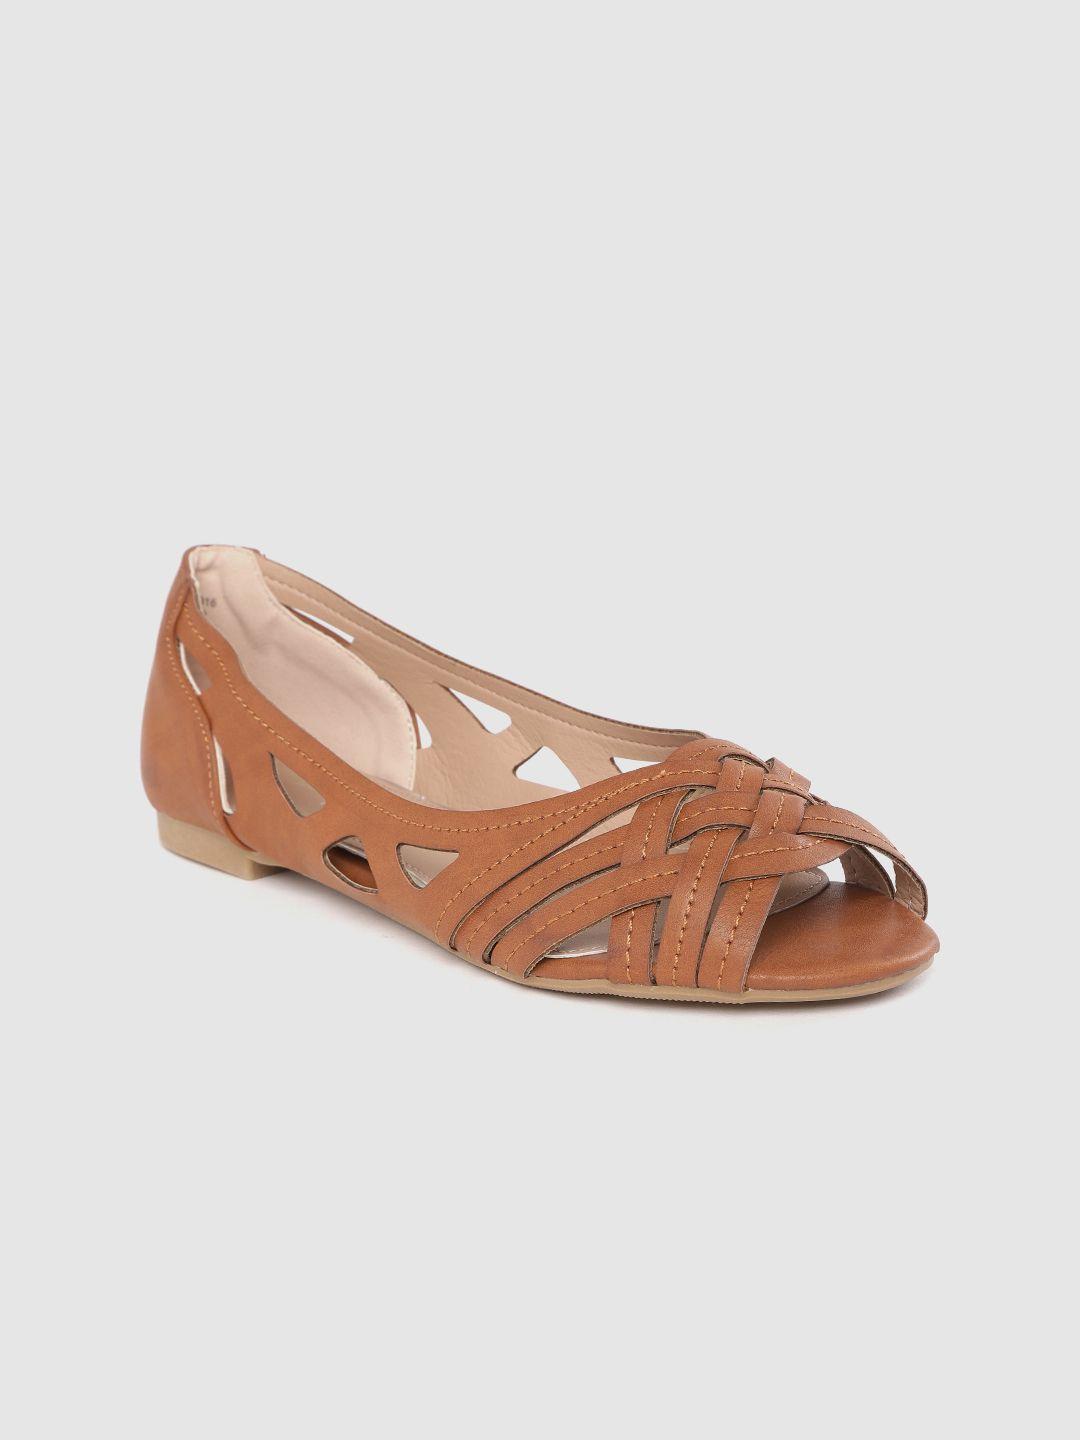 dorothy perkins women brown criss-cross open toe flats